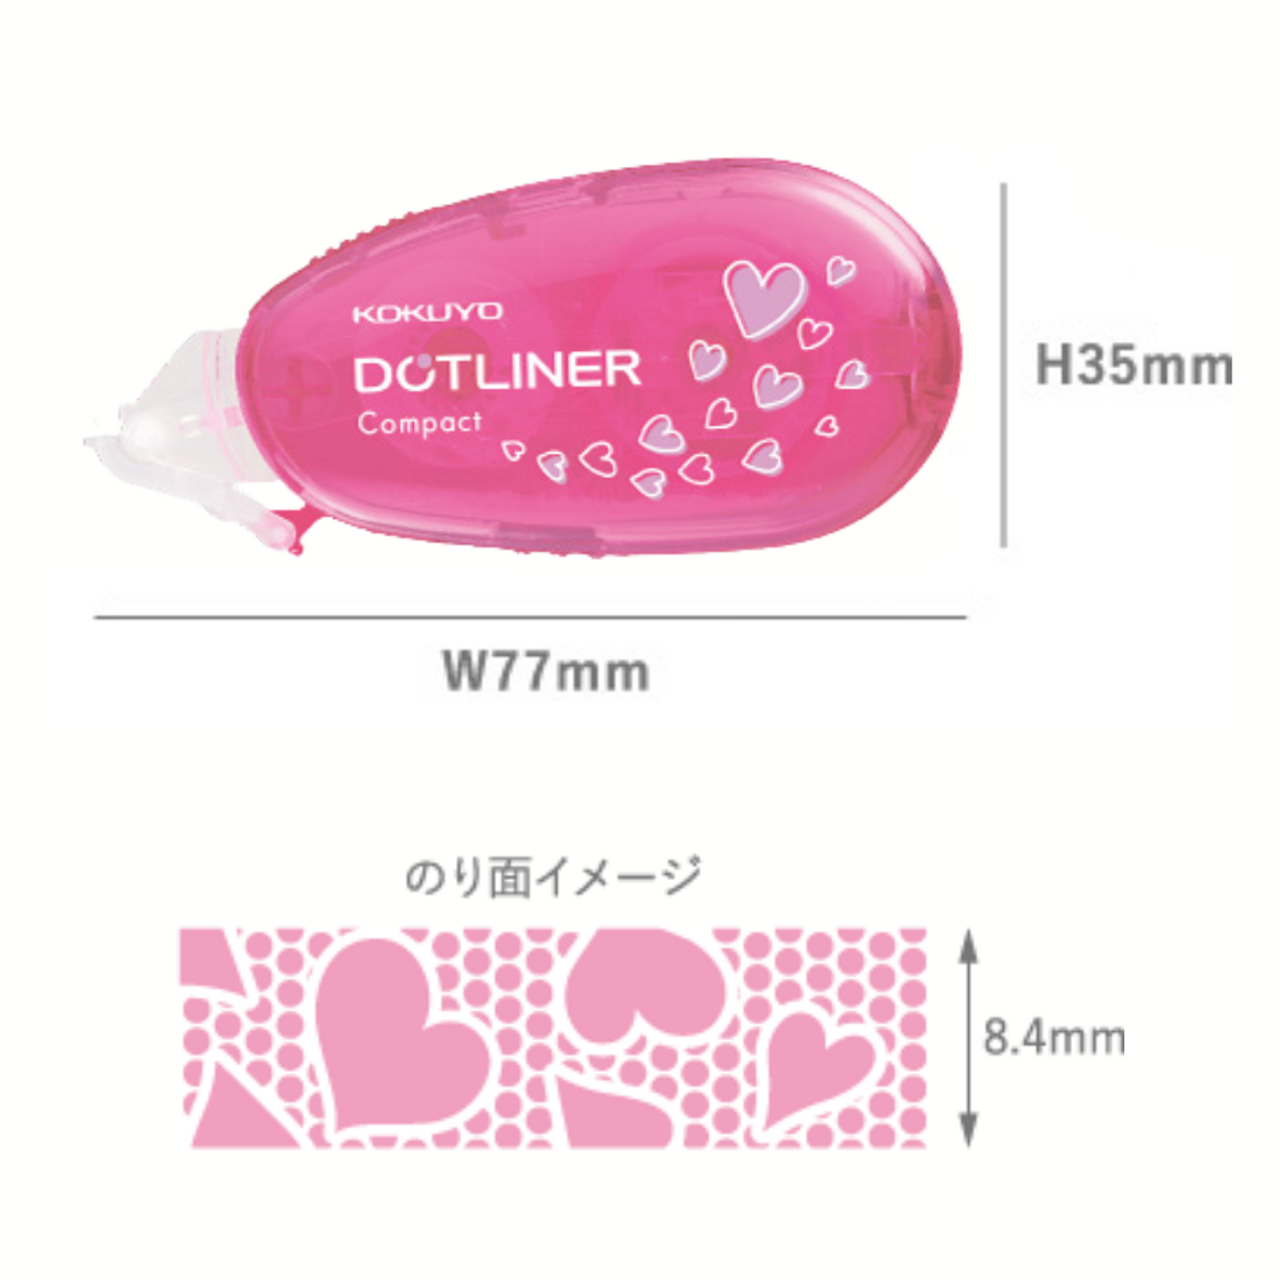 KOKUYO DotLiner Compact Glue Tape & Refill - Pink